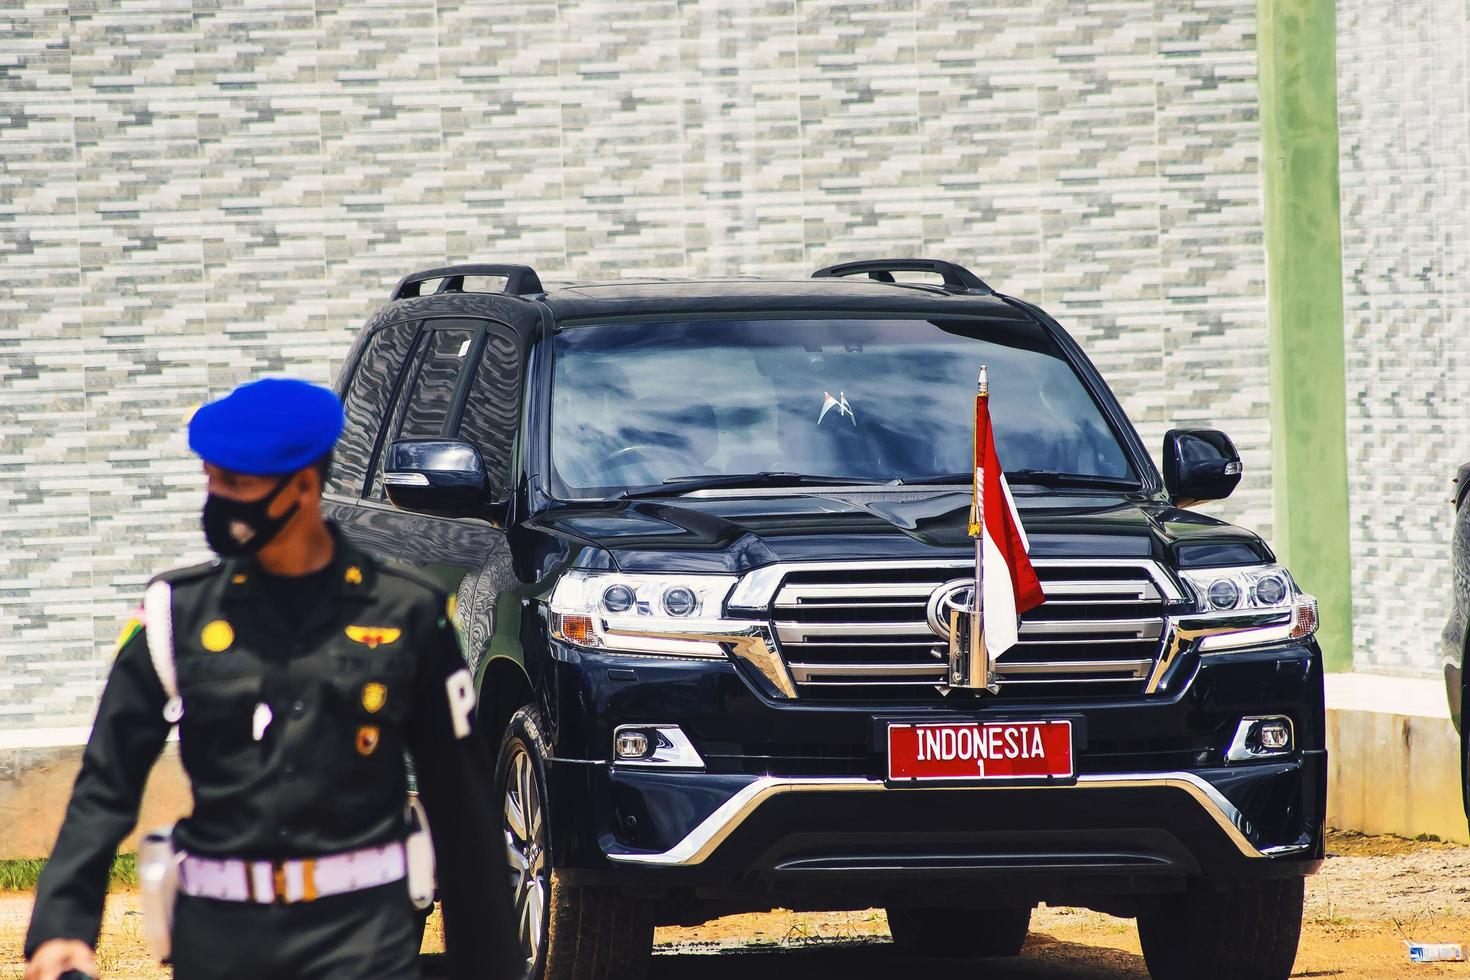 sorong, papua oeste, indonésia, 4 de outubro de 2021. visita de estado do presidente da indonésia, joko widodo. foto